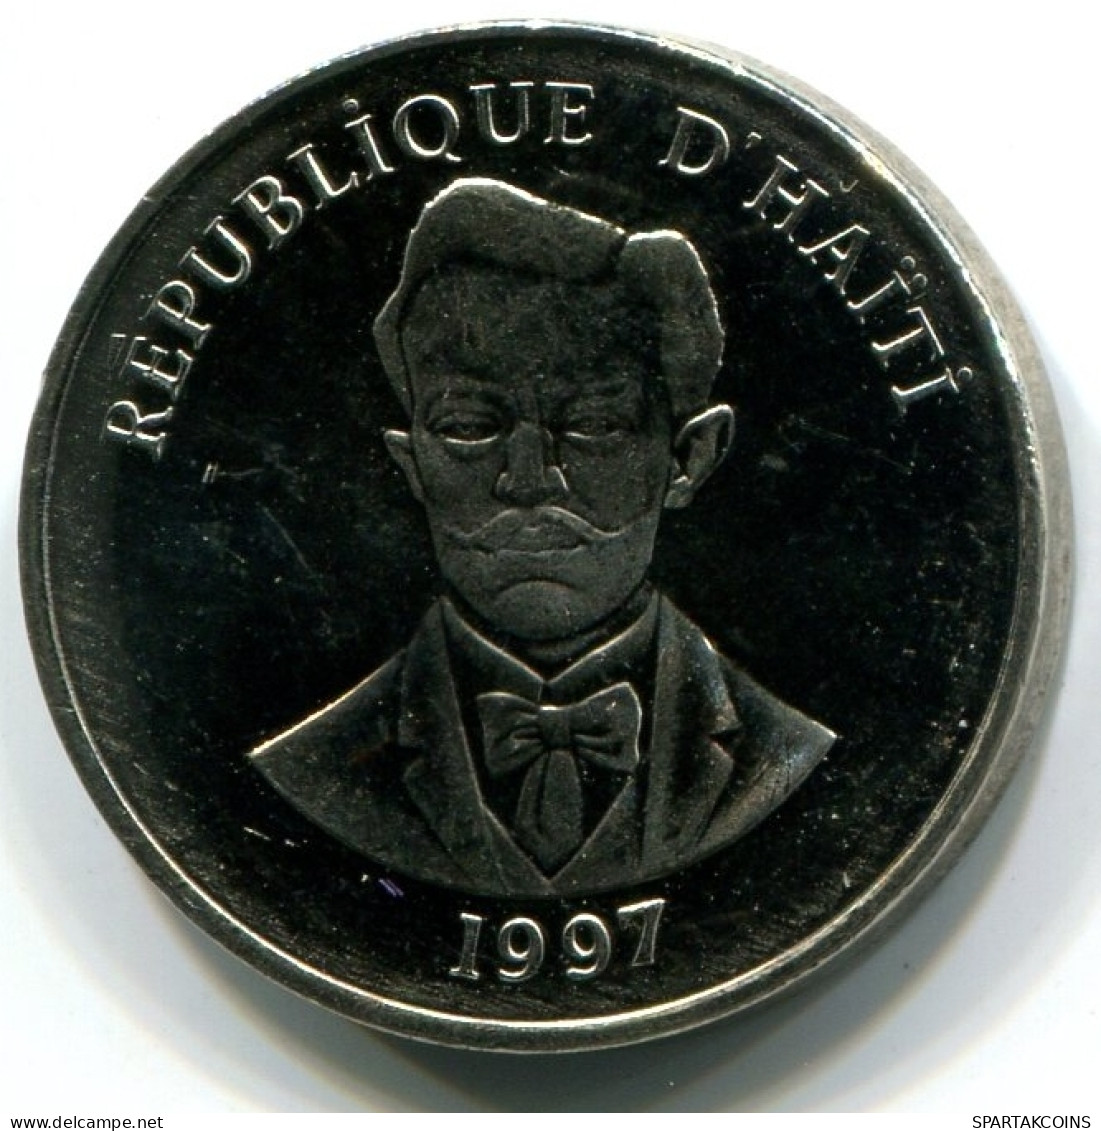 5 CENTIMES 1997 HAITI UNC Coin #W11389.U - Haïti